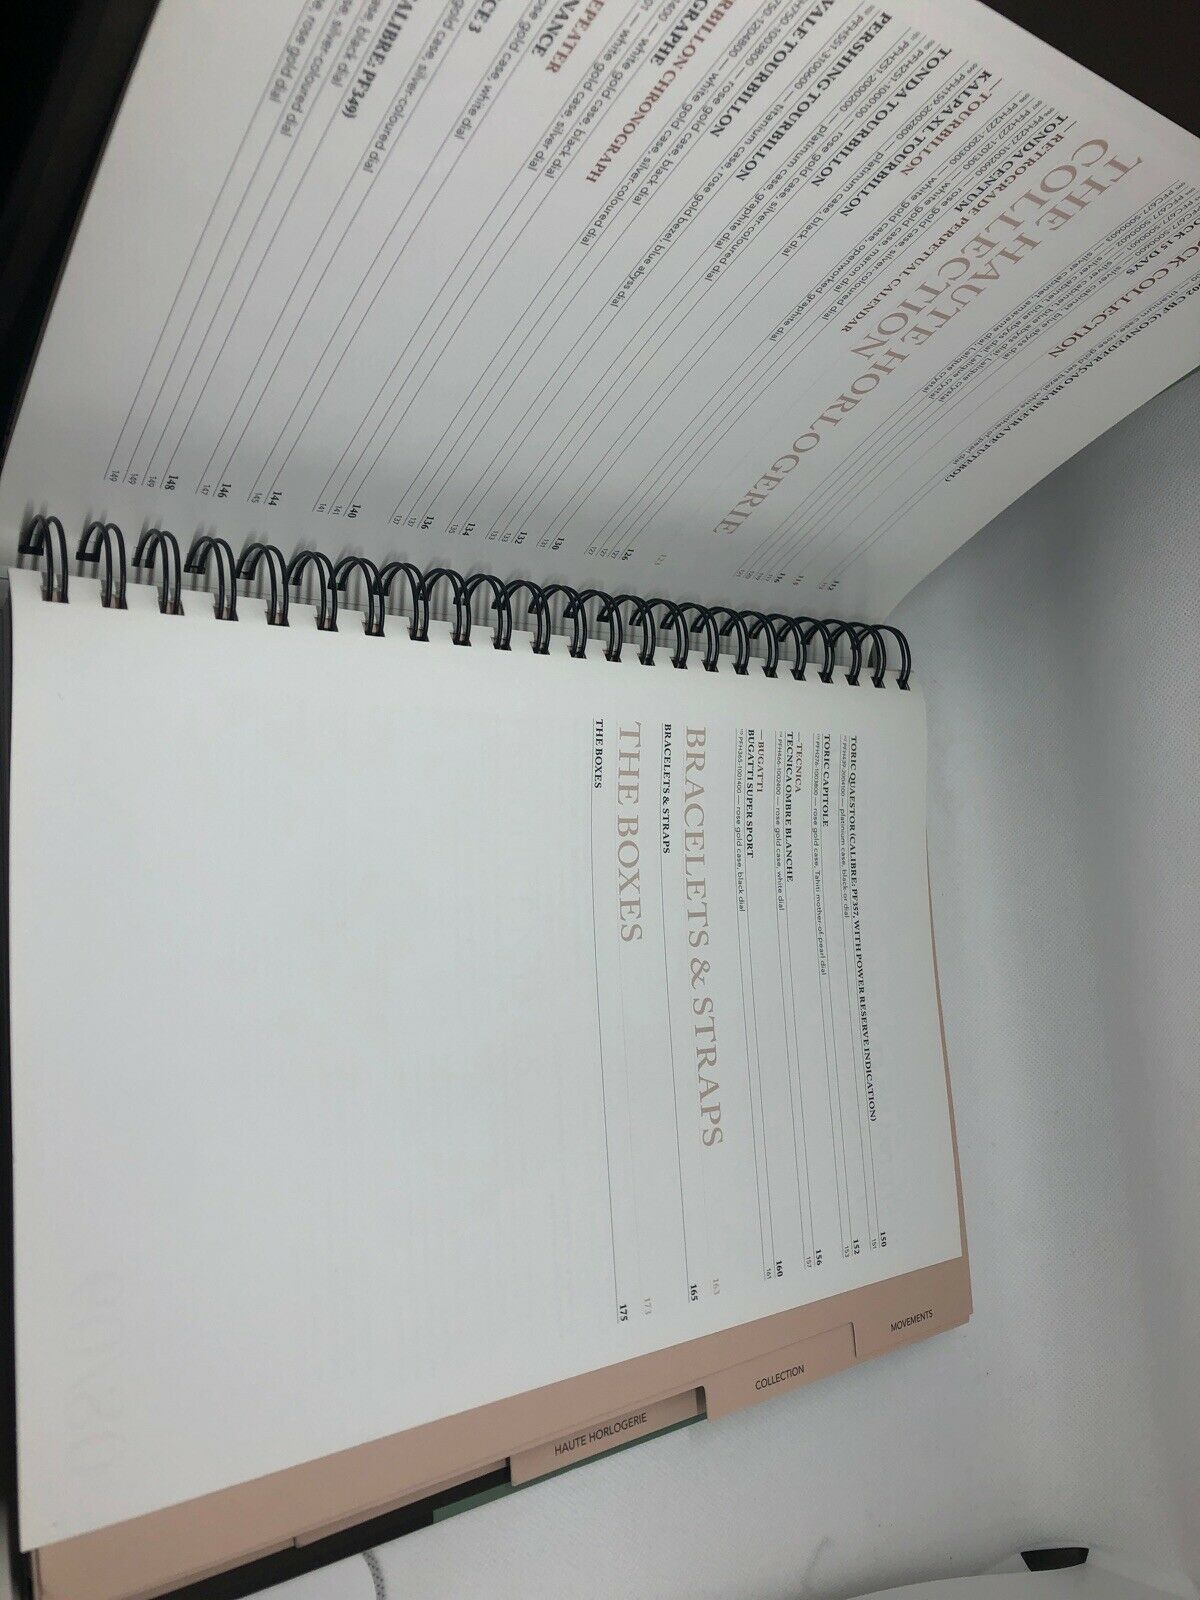 Parmigiani Manual Hardcover Catalog Book 2014 2015